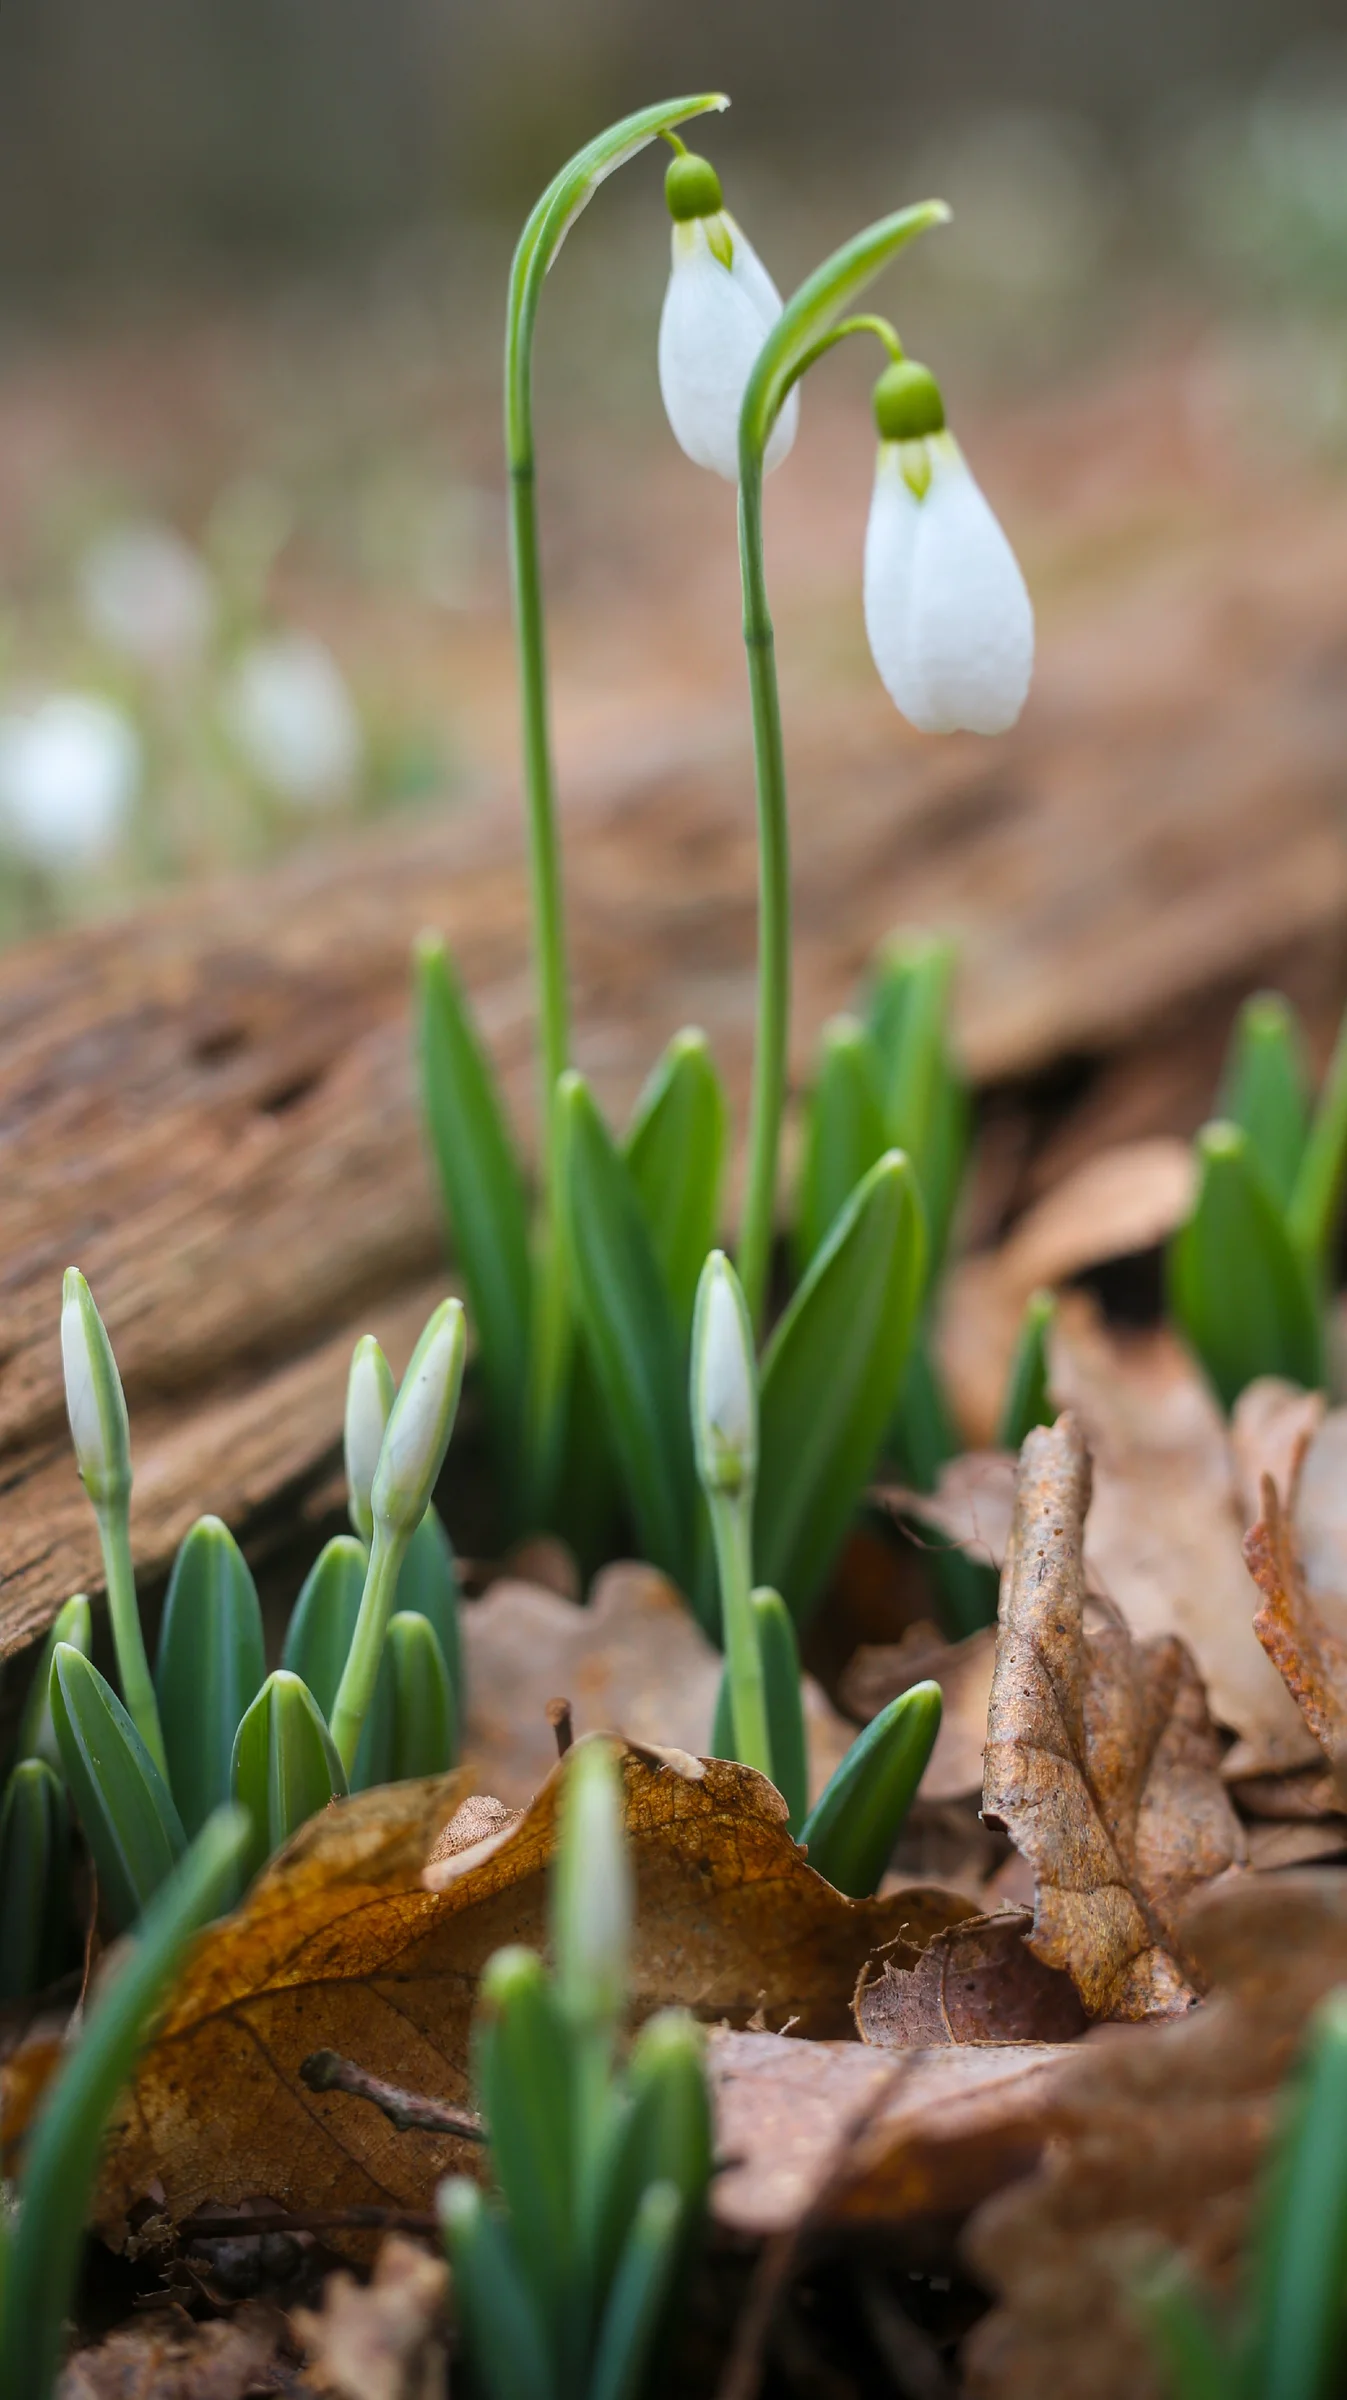 KRASOTA.RU on X: \"Полмесяца до весны, но красота природы уже готова  пробиваться из-под снега! #beauty #красота #природа #весна #цветы  https://t.co/MV6bRqFsBh https://t.co/wNM5Y6YW6d\" / X